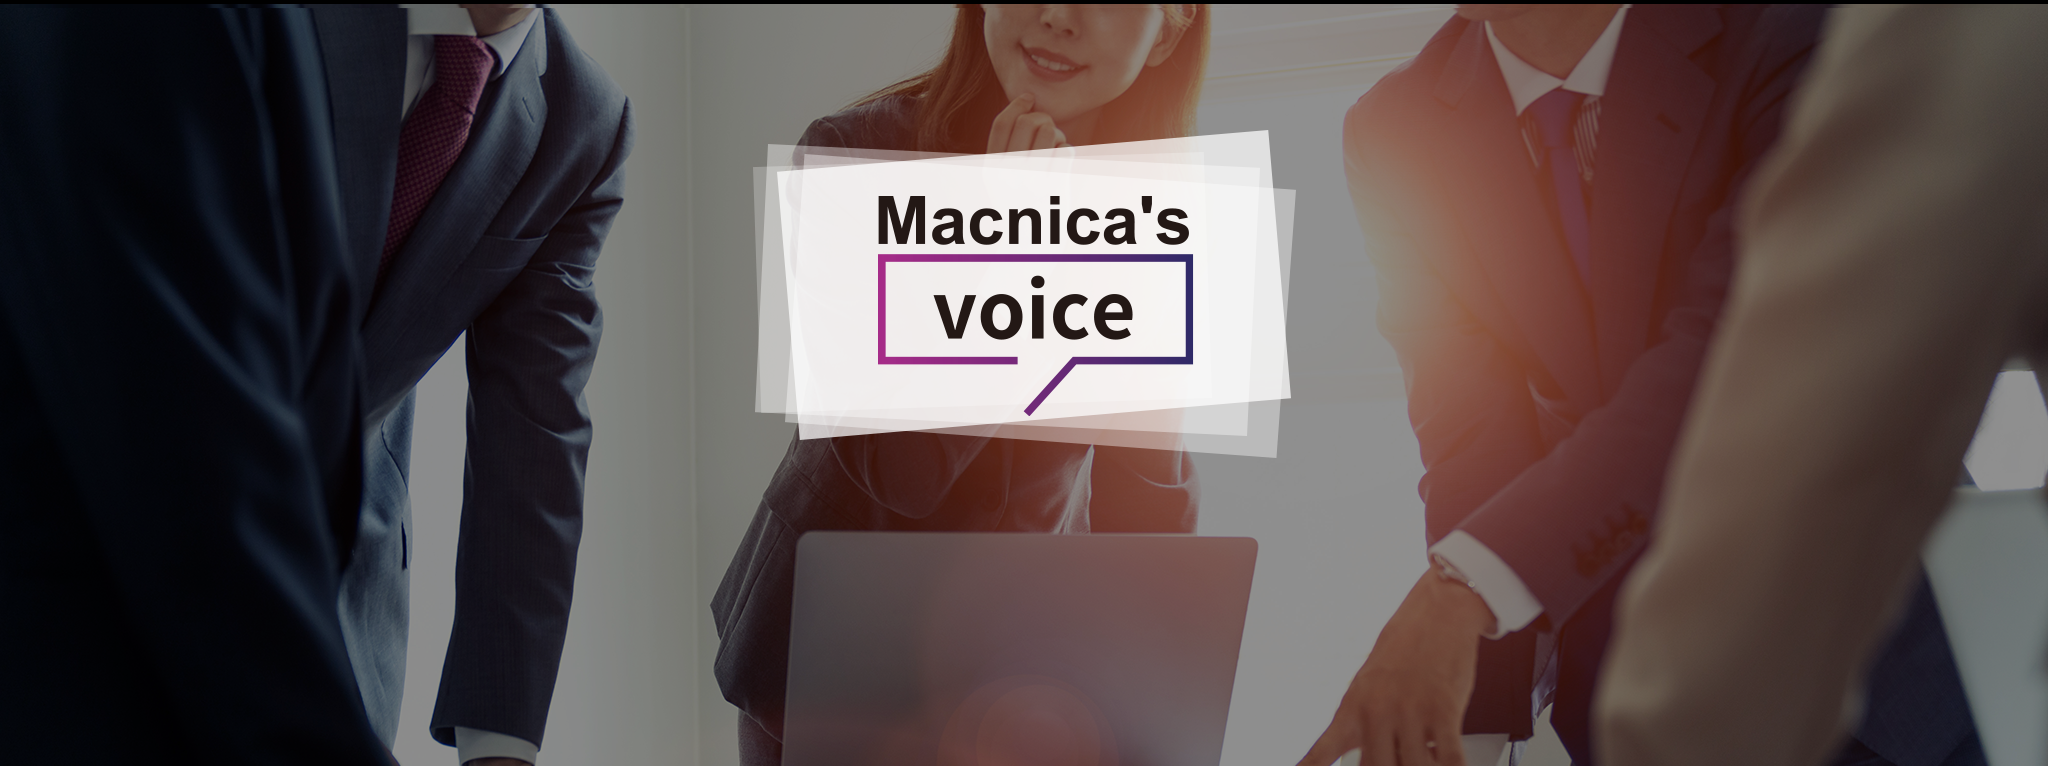 Macnica's Voice